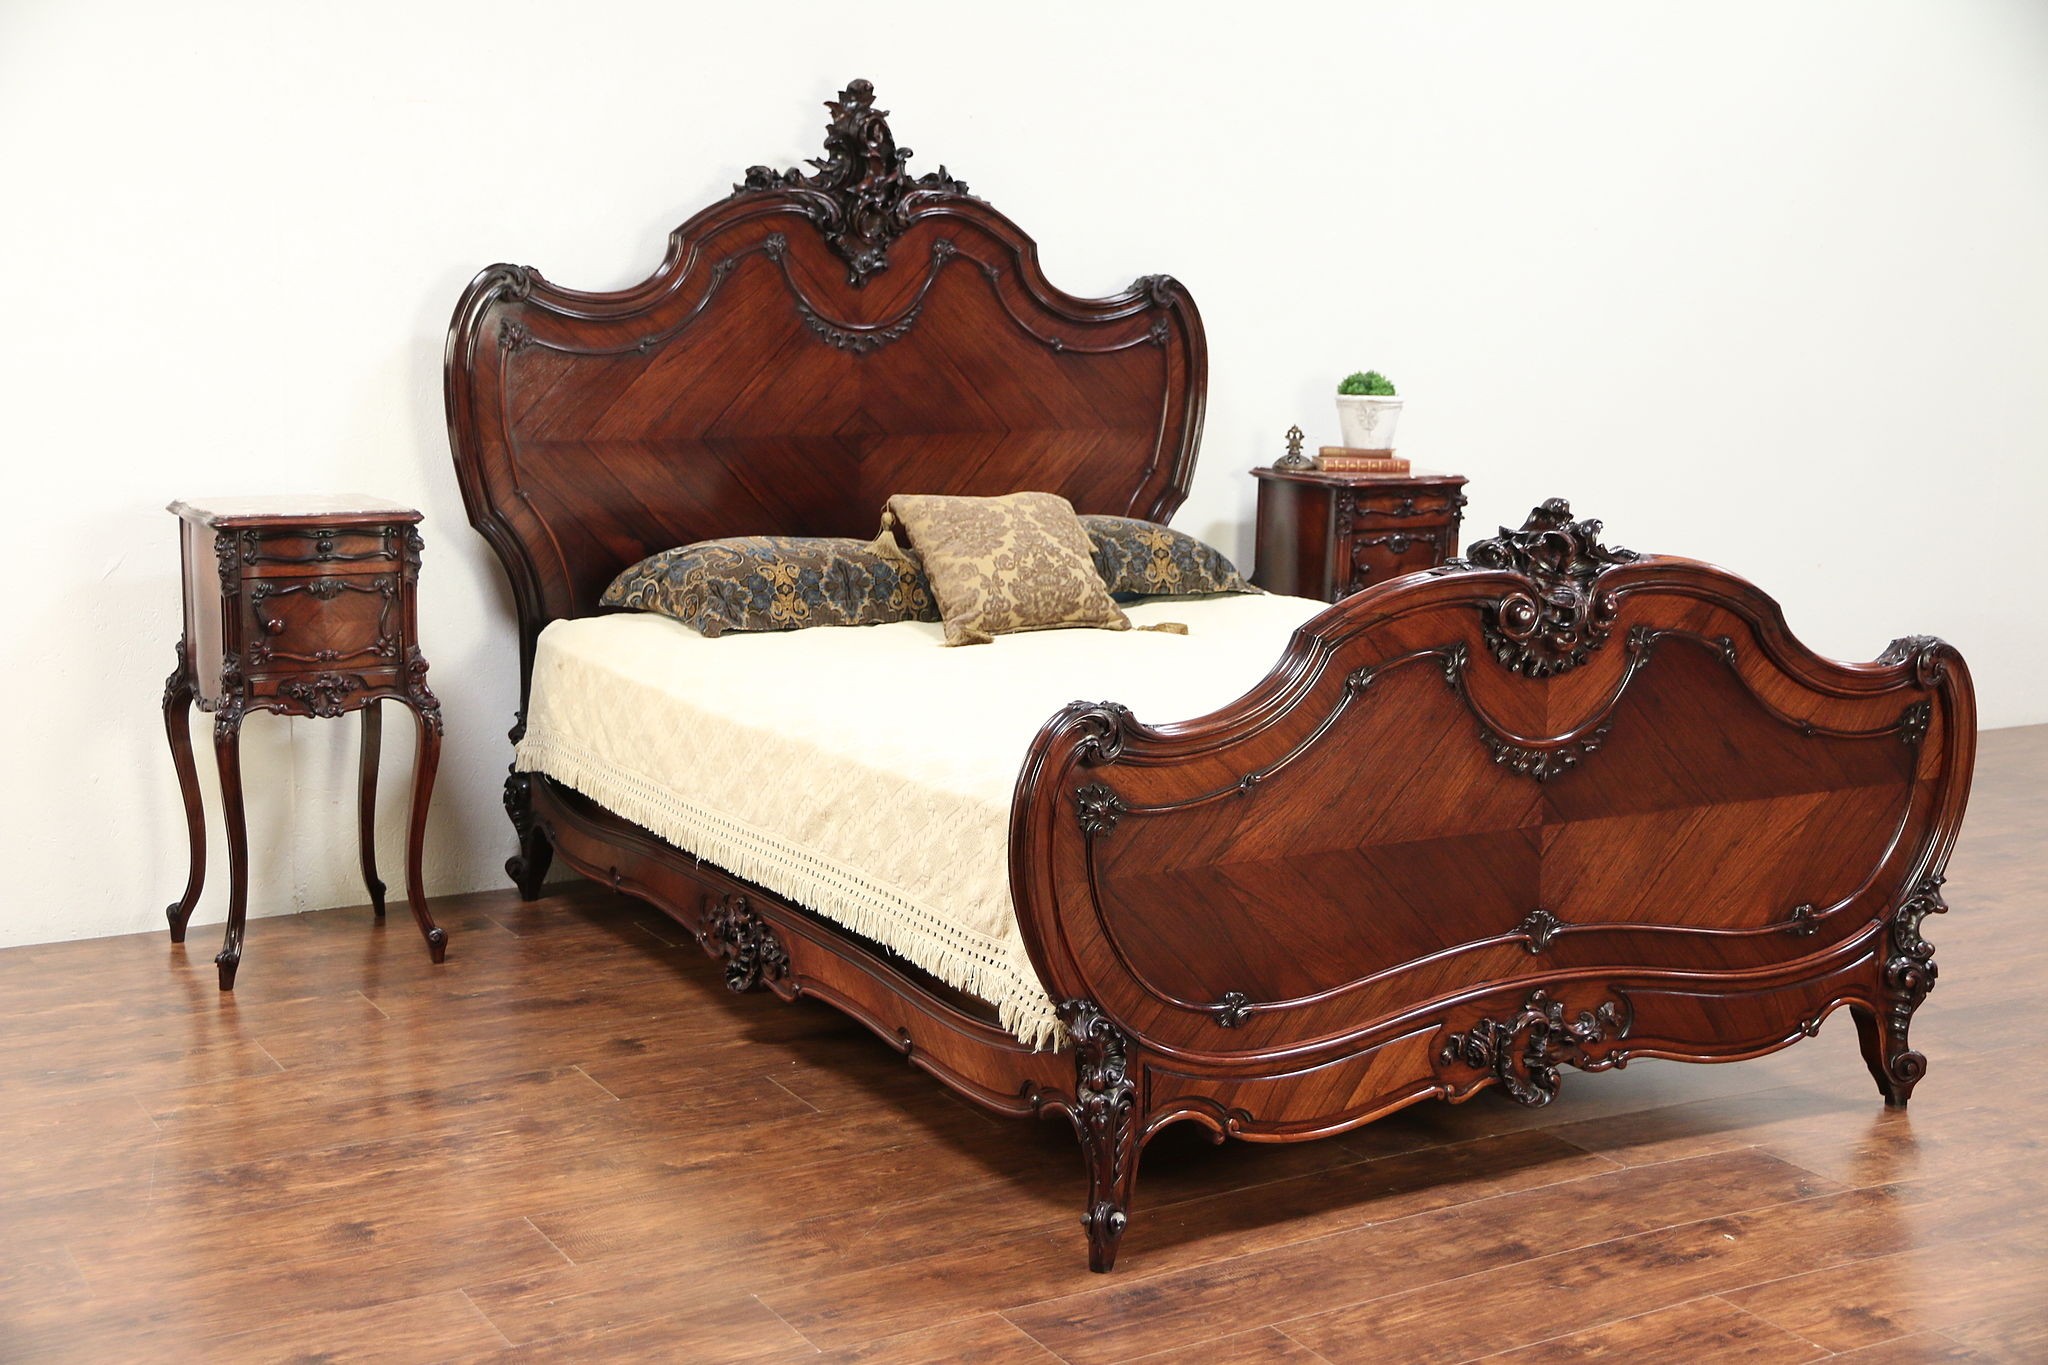 rosewood bedroom furniture set